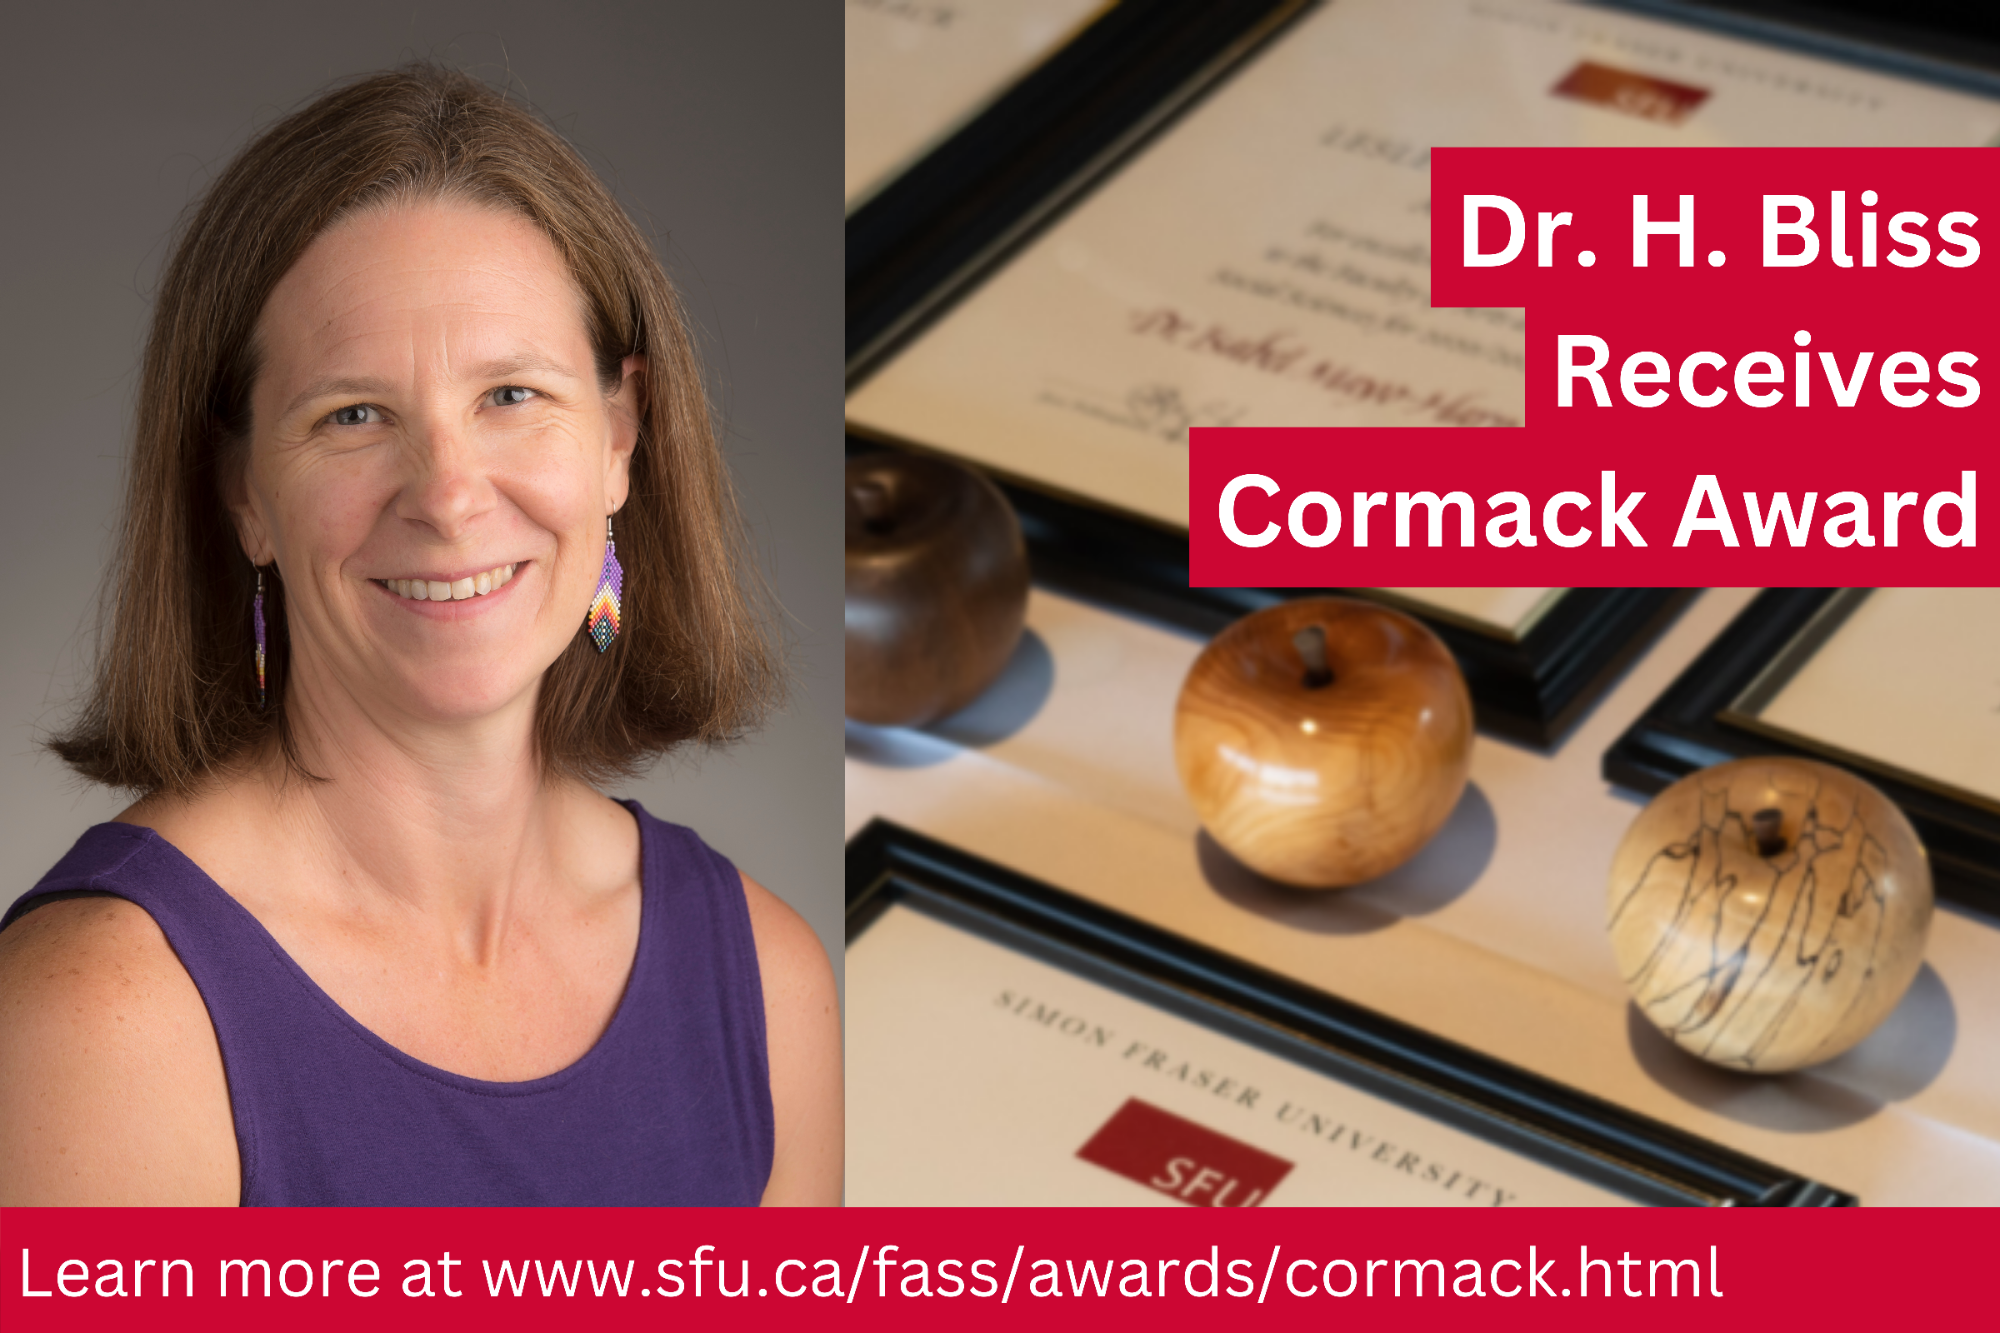 Dr. H. Bliss receives Cormack Teaching Award